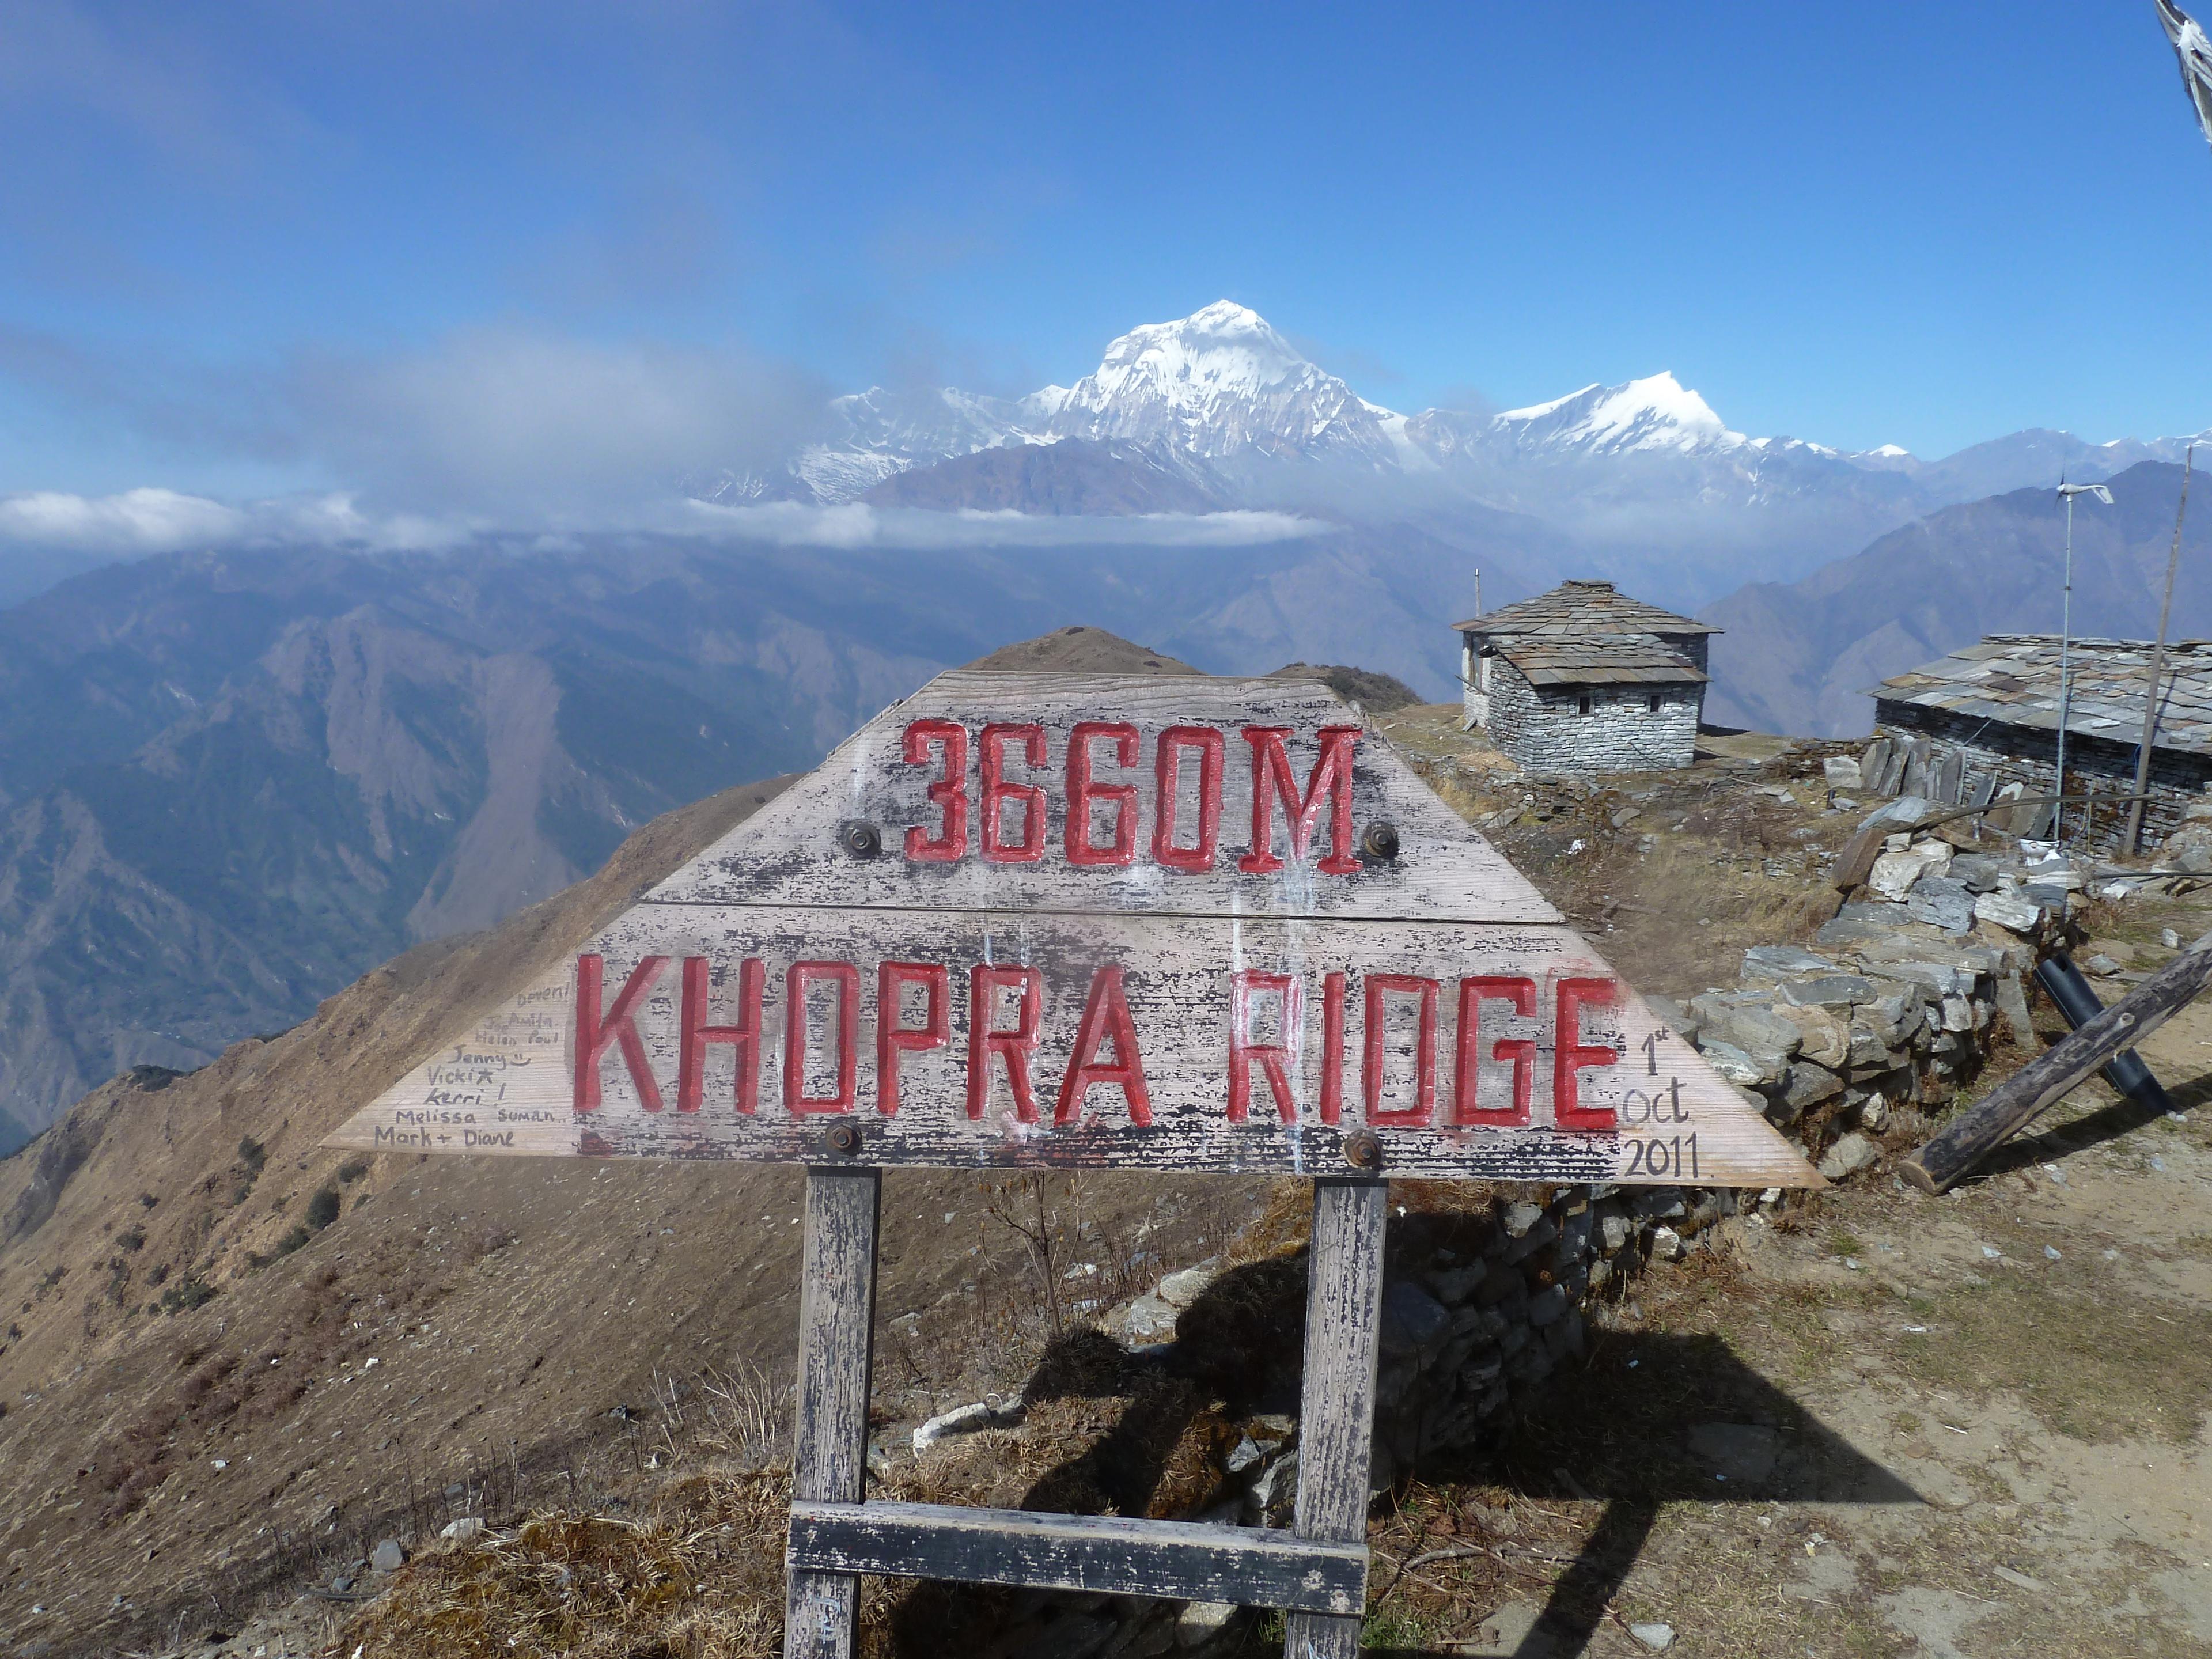 Kopra Ridge